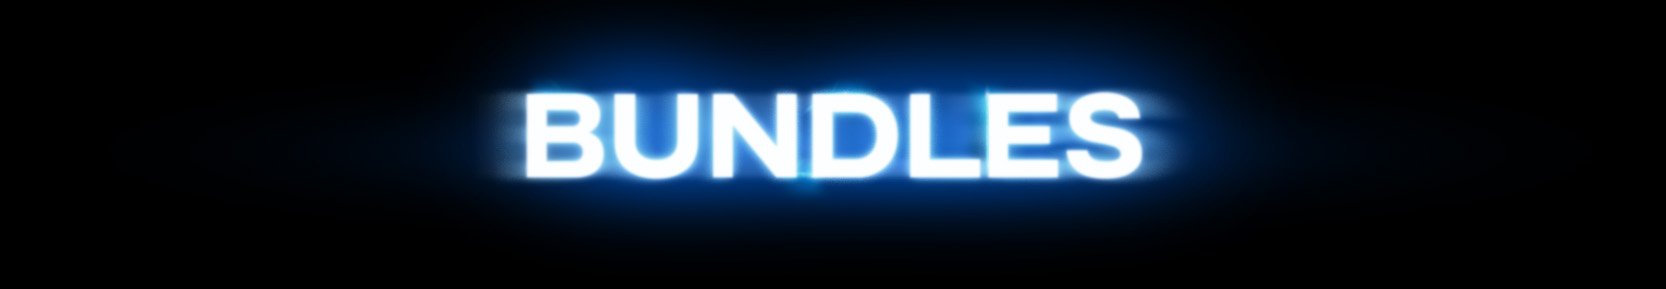 Bundles Header Image - Glowing Text